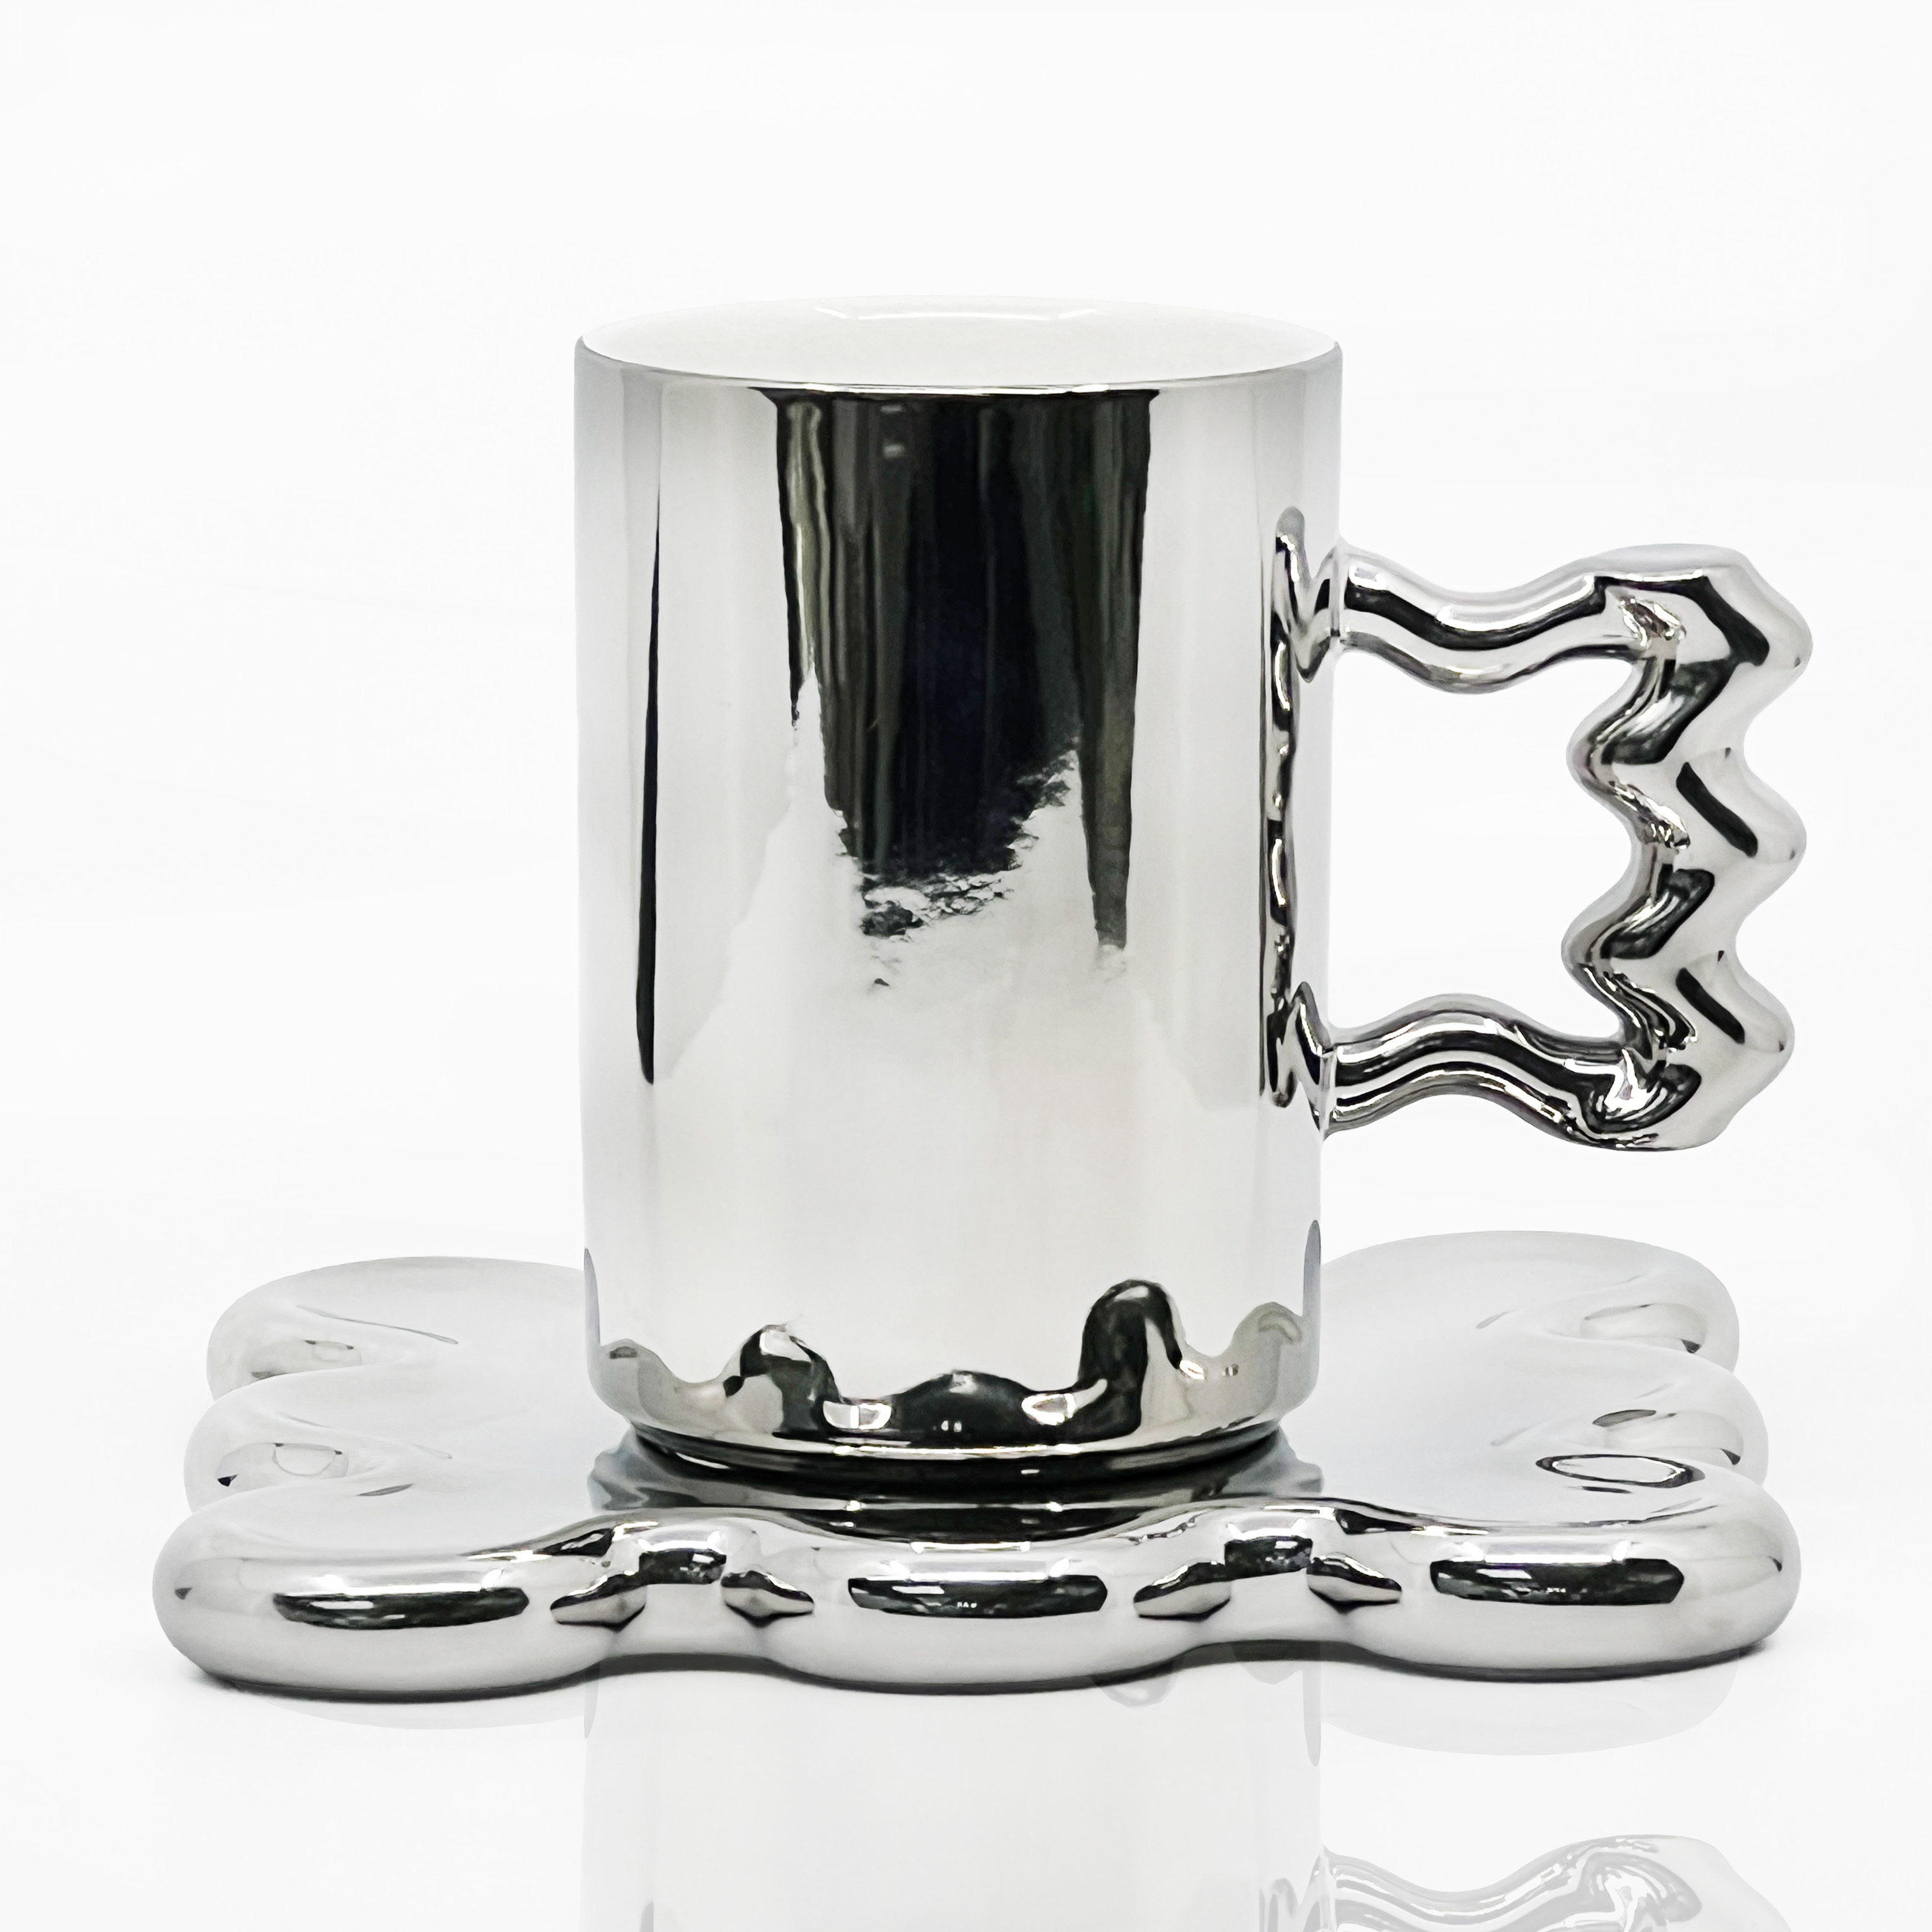 Wavy Ceramic Mug Set (380ml)
ceramic coffee mugs
ceramic mugs
ceramic coffee cup
cup gift ideas